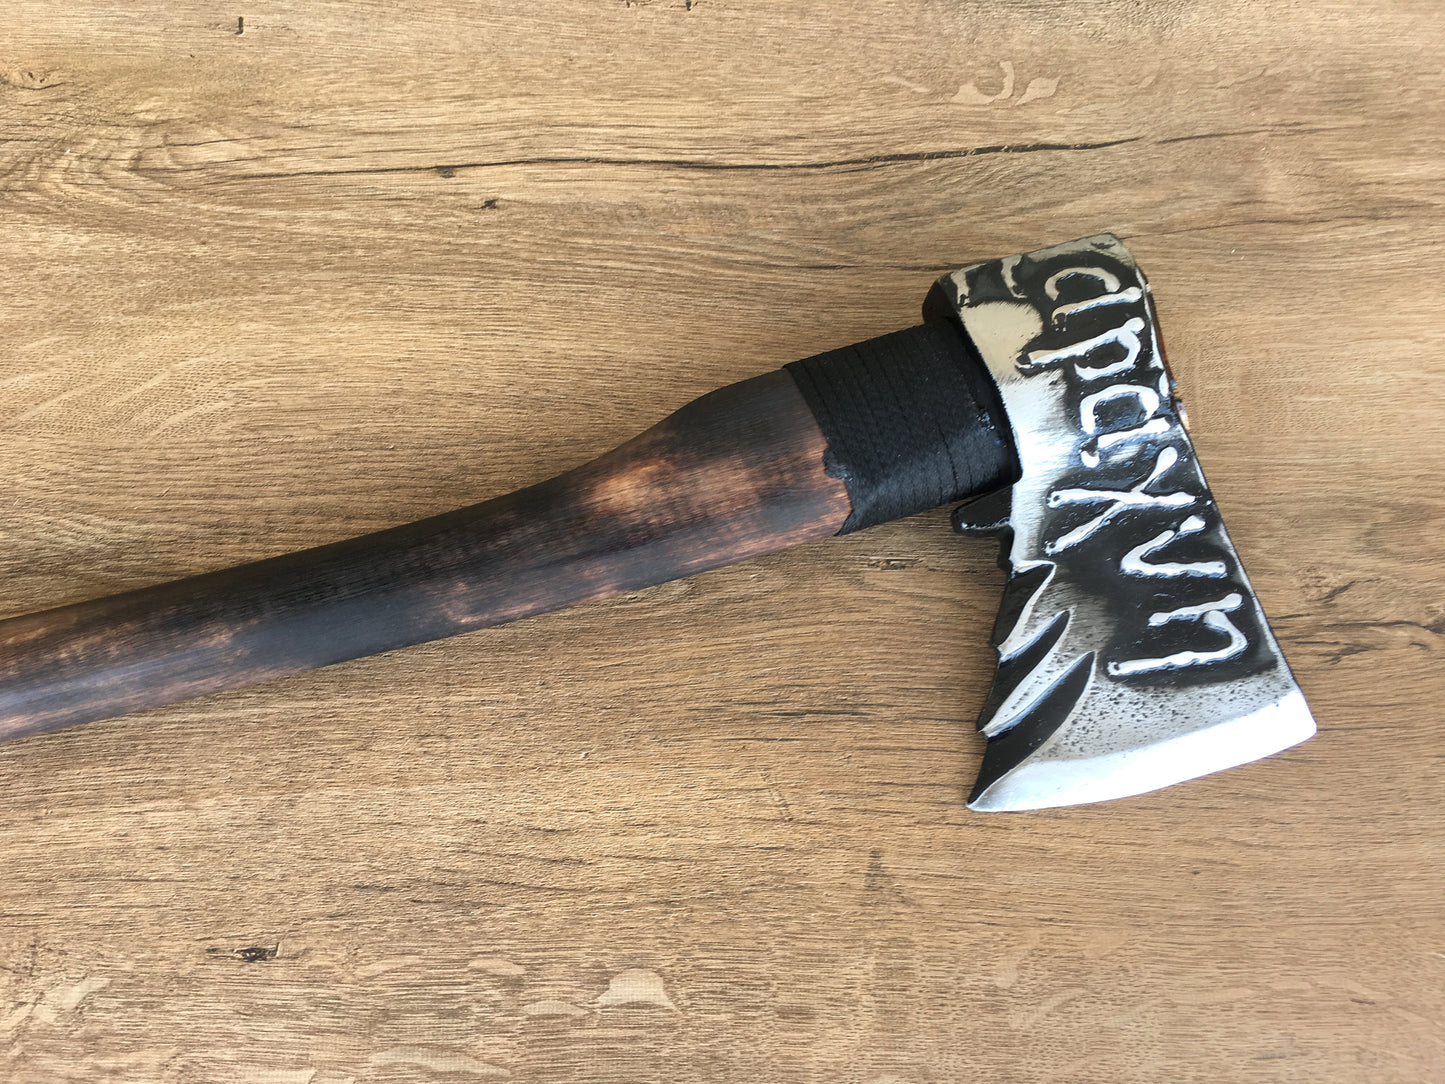 Axe gift, mens axe, man anniversary gift, man accessories, man knife, viking axe, tomahawk, hatchet, mens gifts, medieval axe, viking gifts